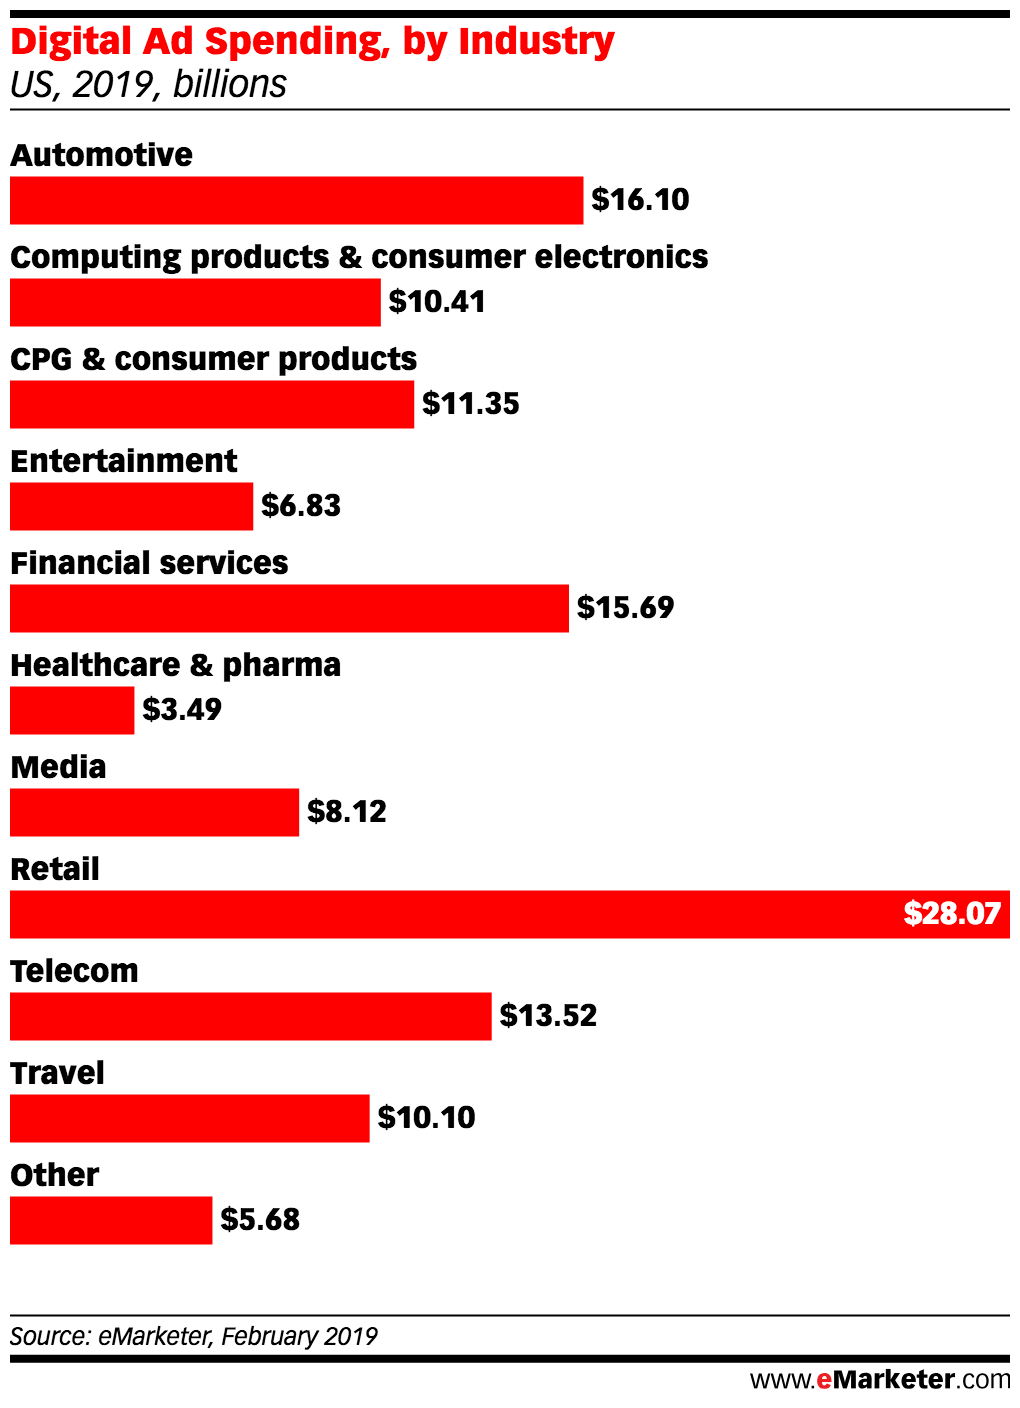 Digital Ad Spending, by Industry